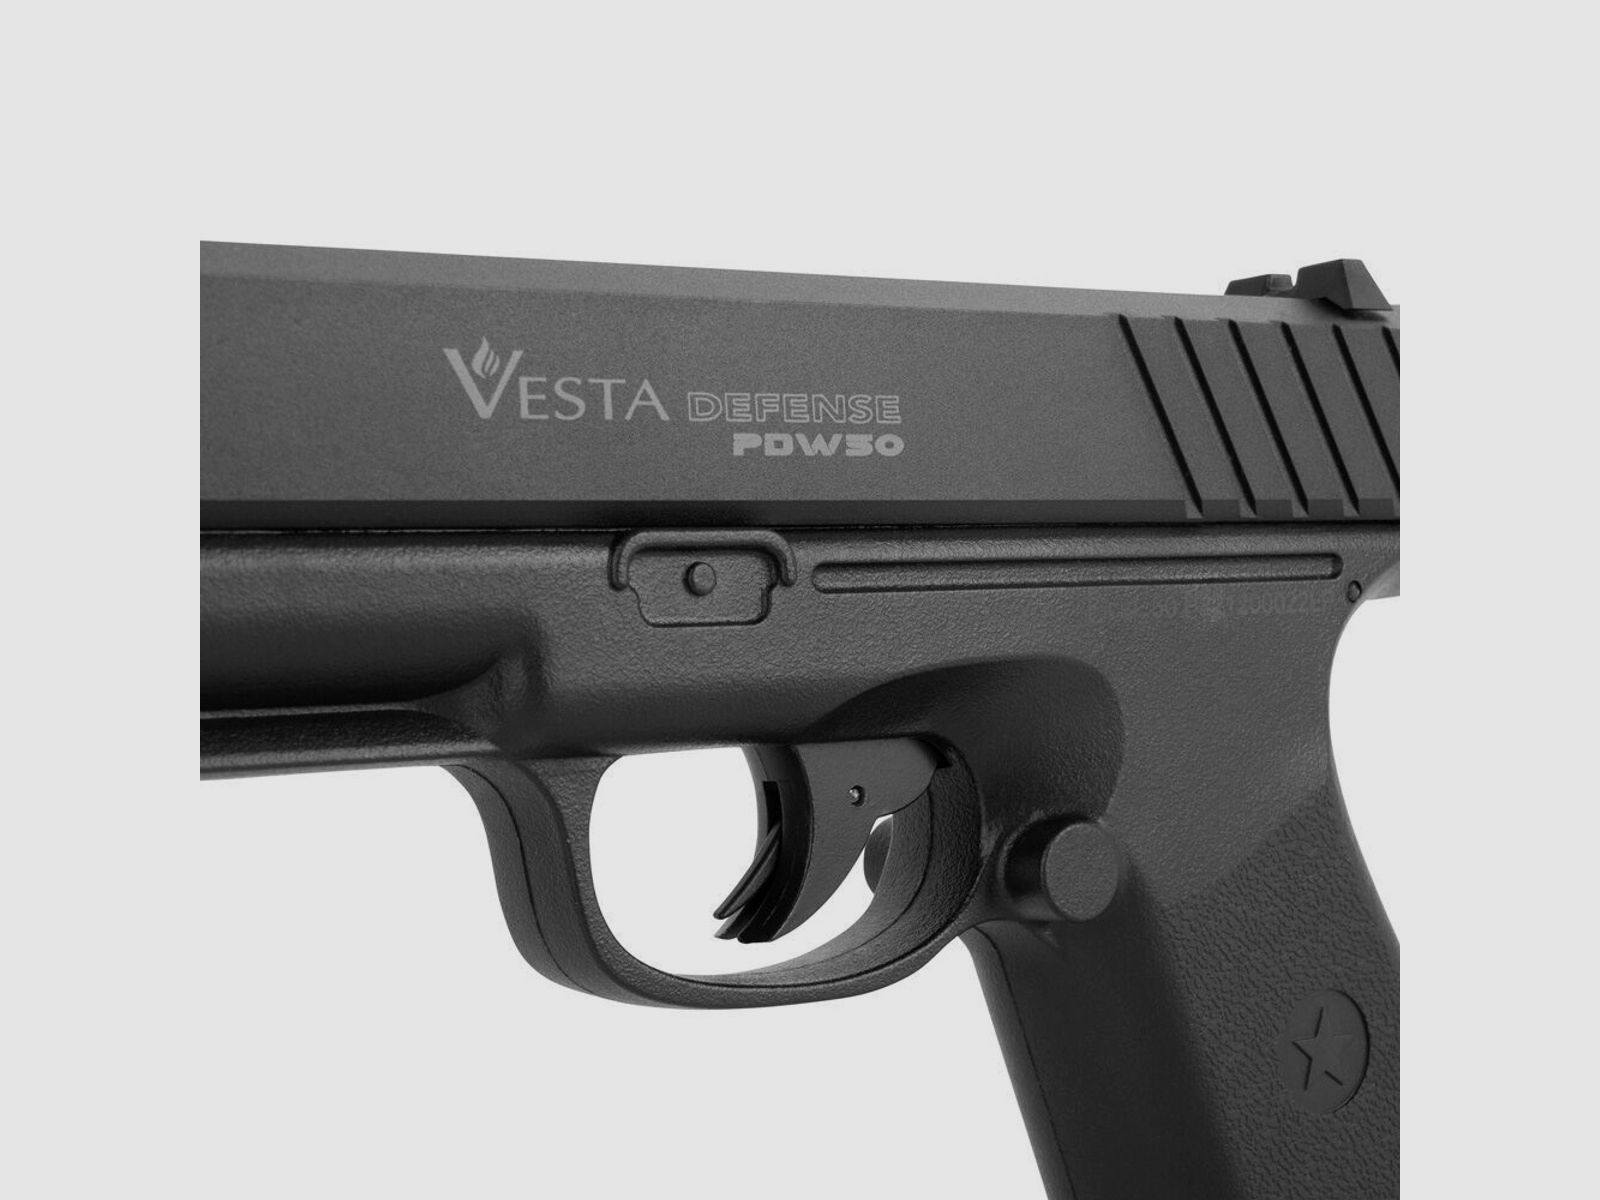 Vesta PDW.50 RAM Pistole Defence Training Marker cal. 50